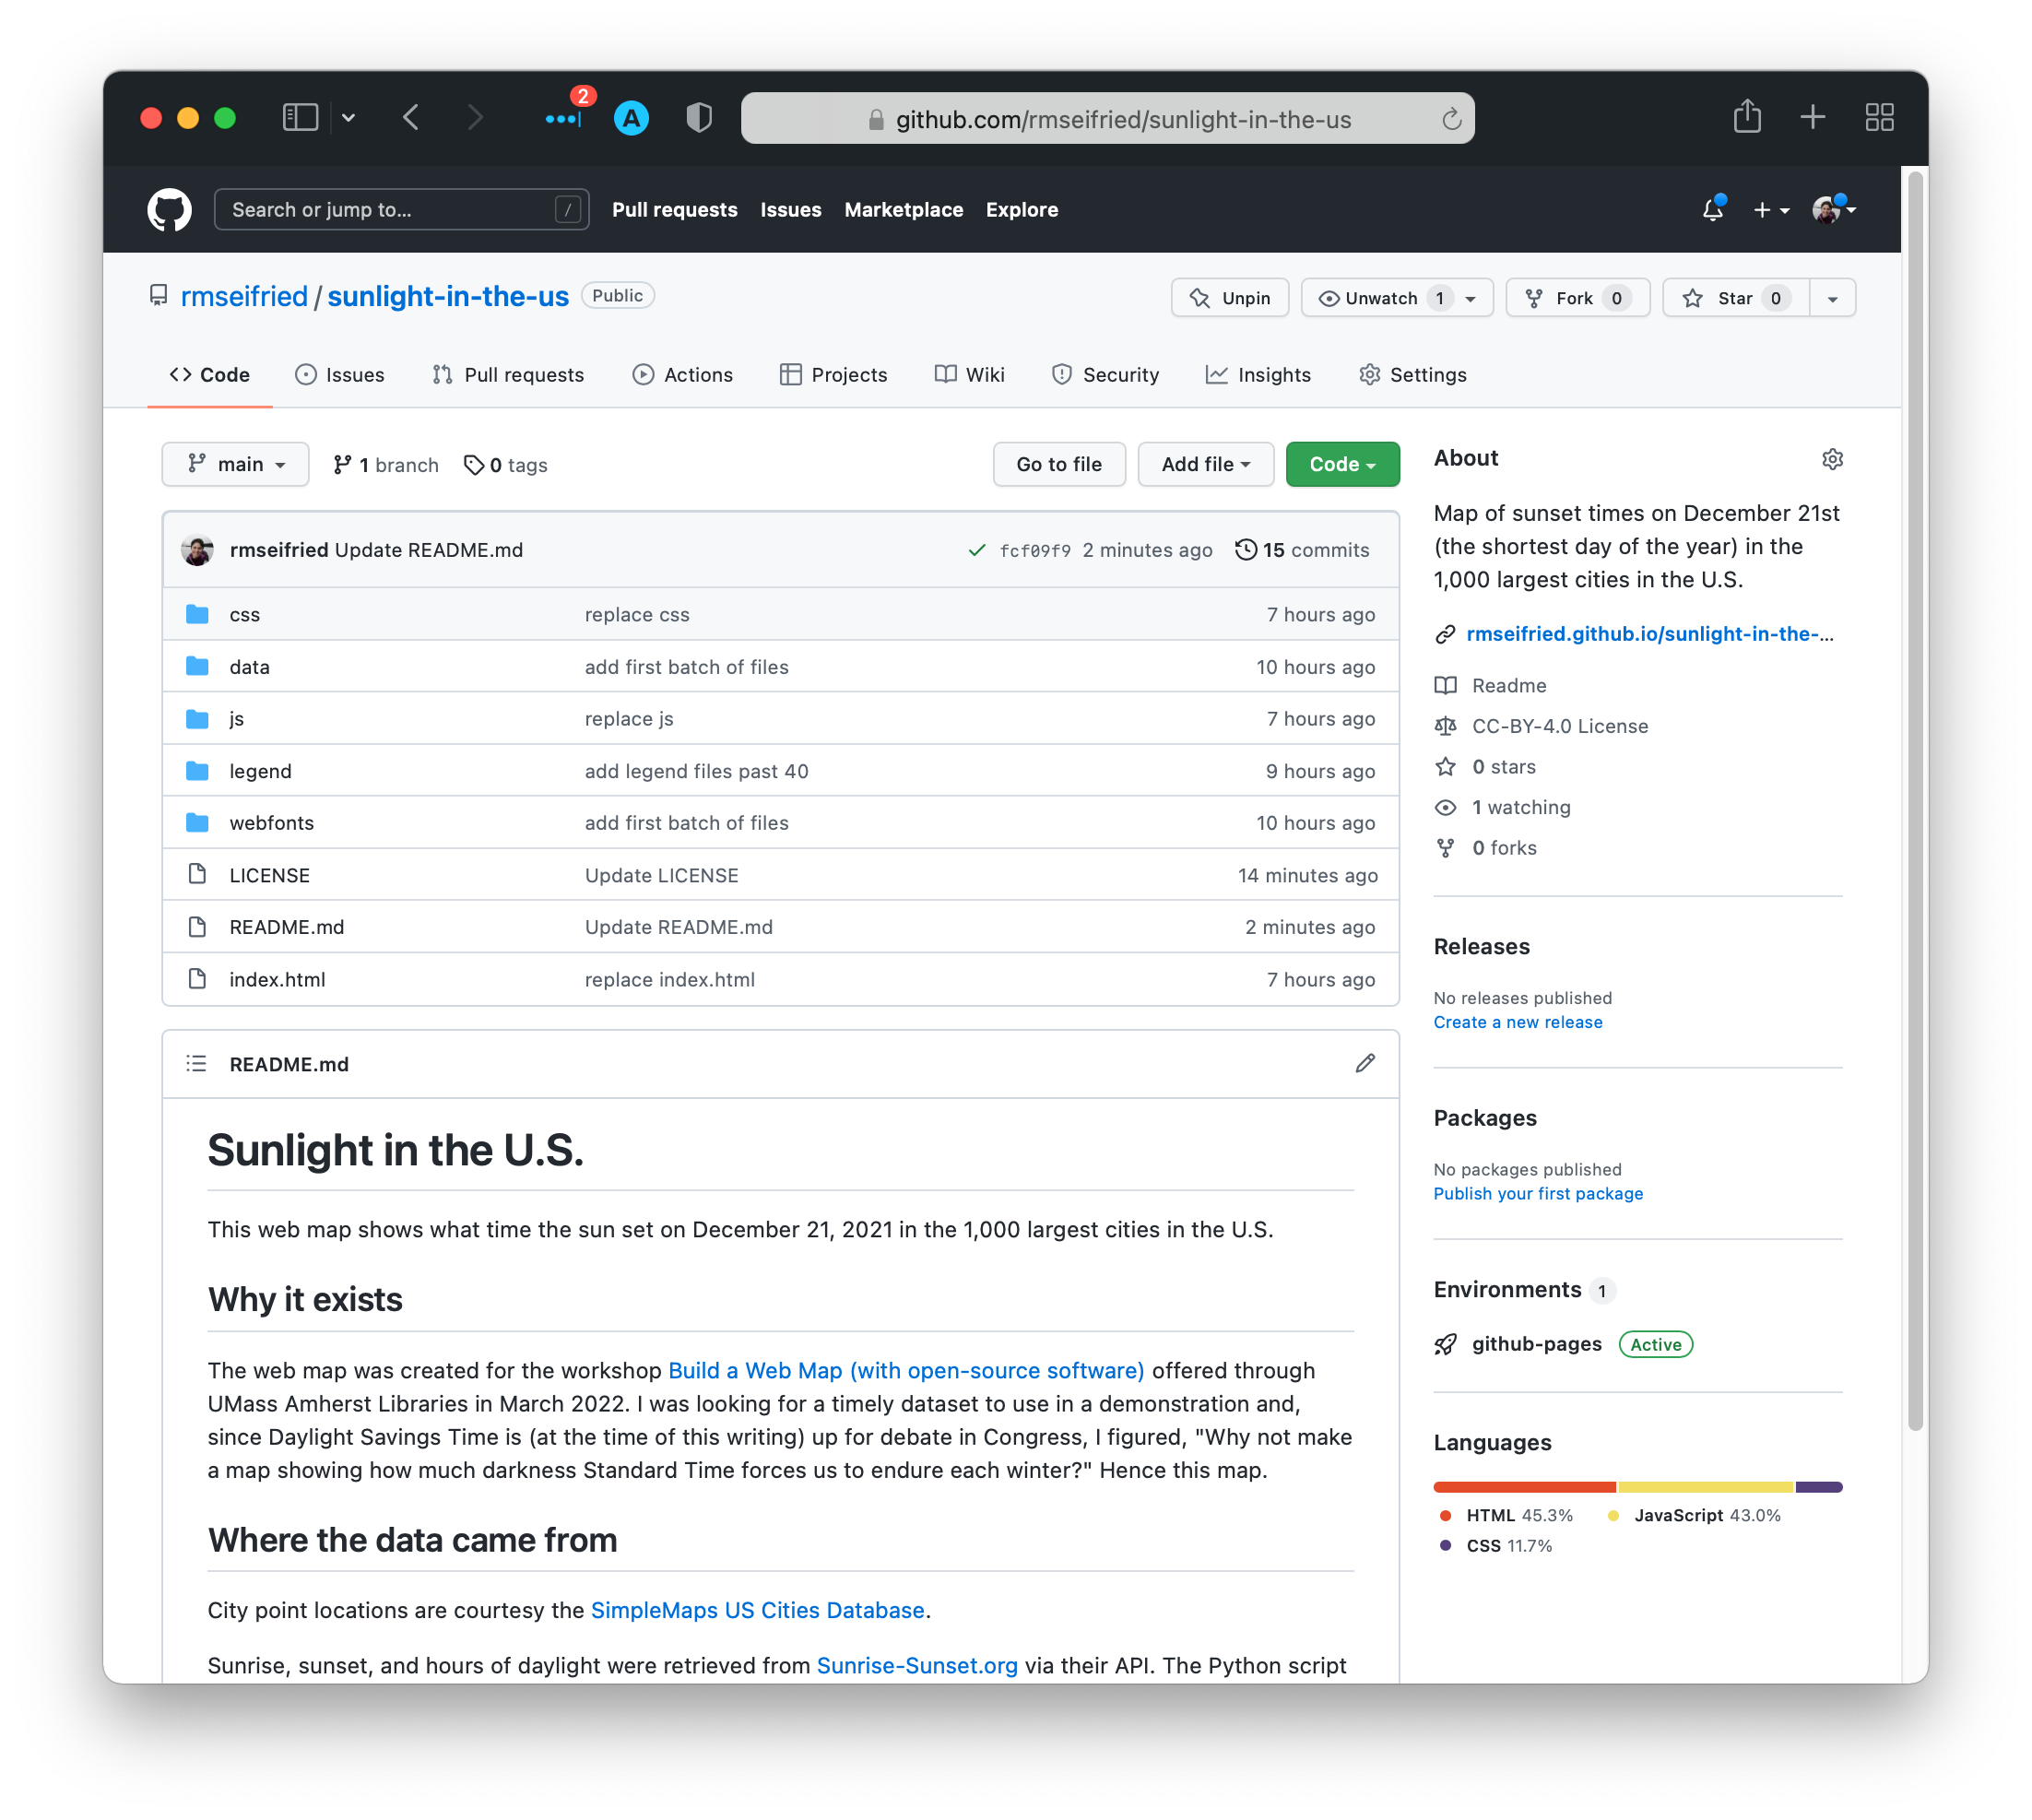 New GitHub repository